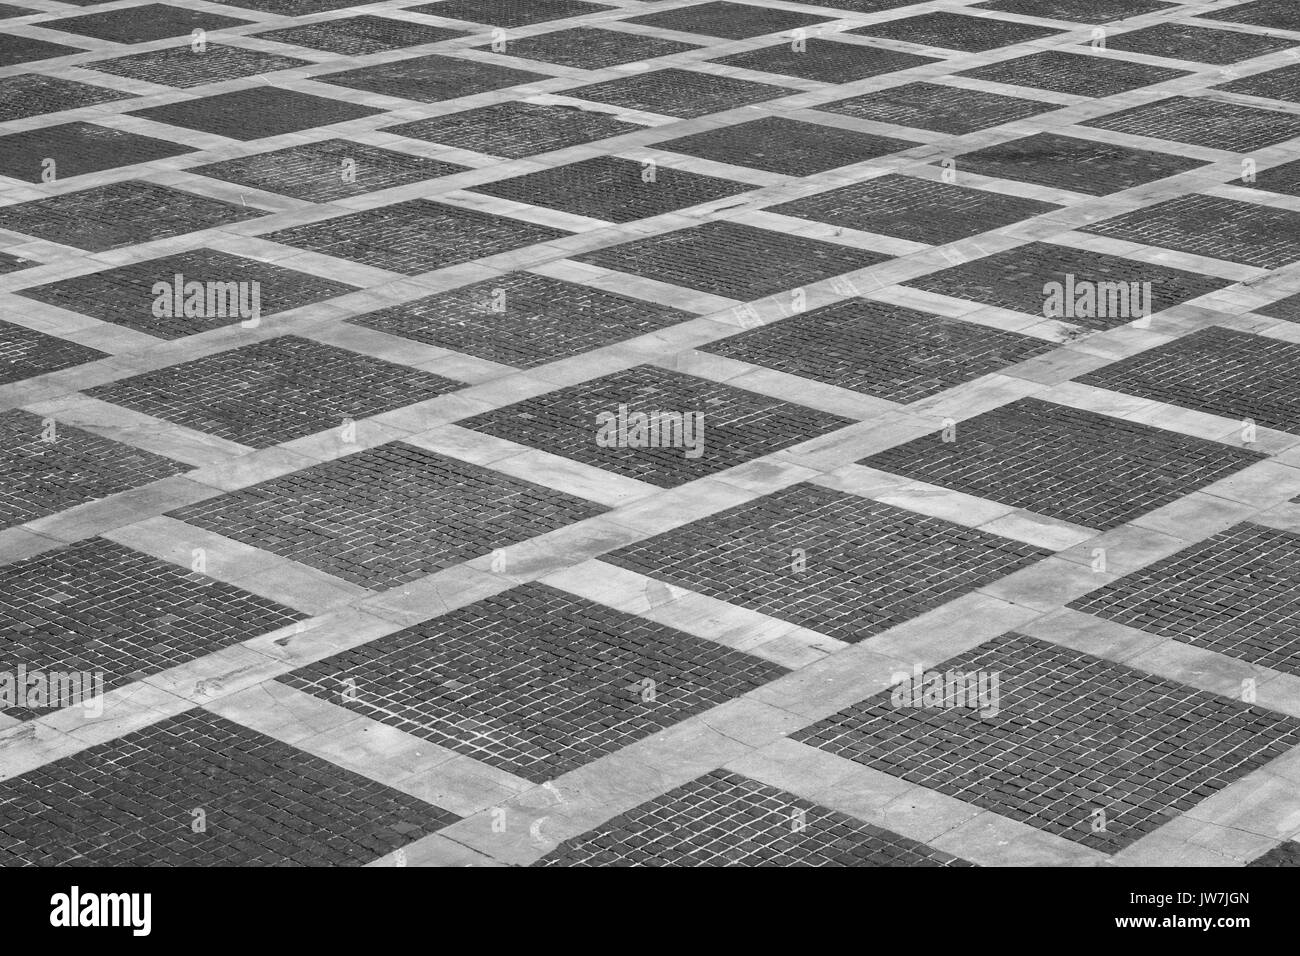 Cityscape with empty brick floor. Urban background. Stock Photo